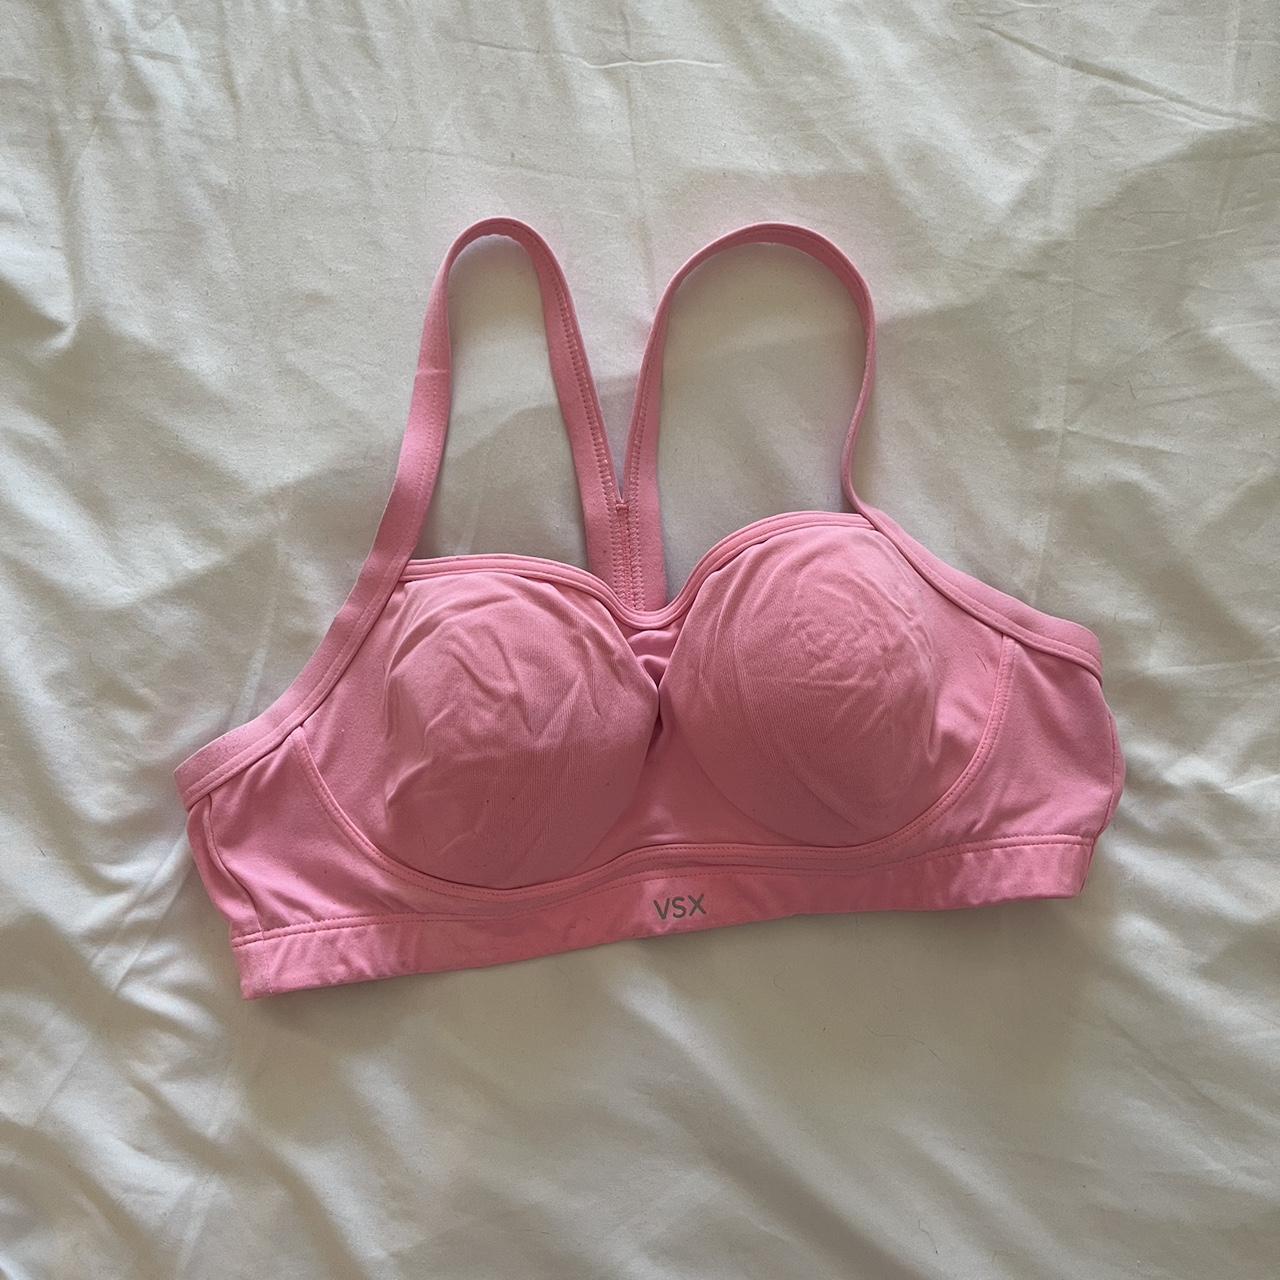 Fishnet Sports Bra Victoria's Secret Pink open mesh - Depop